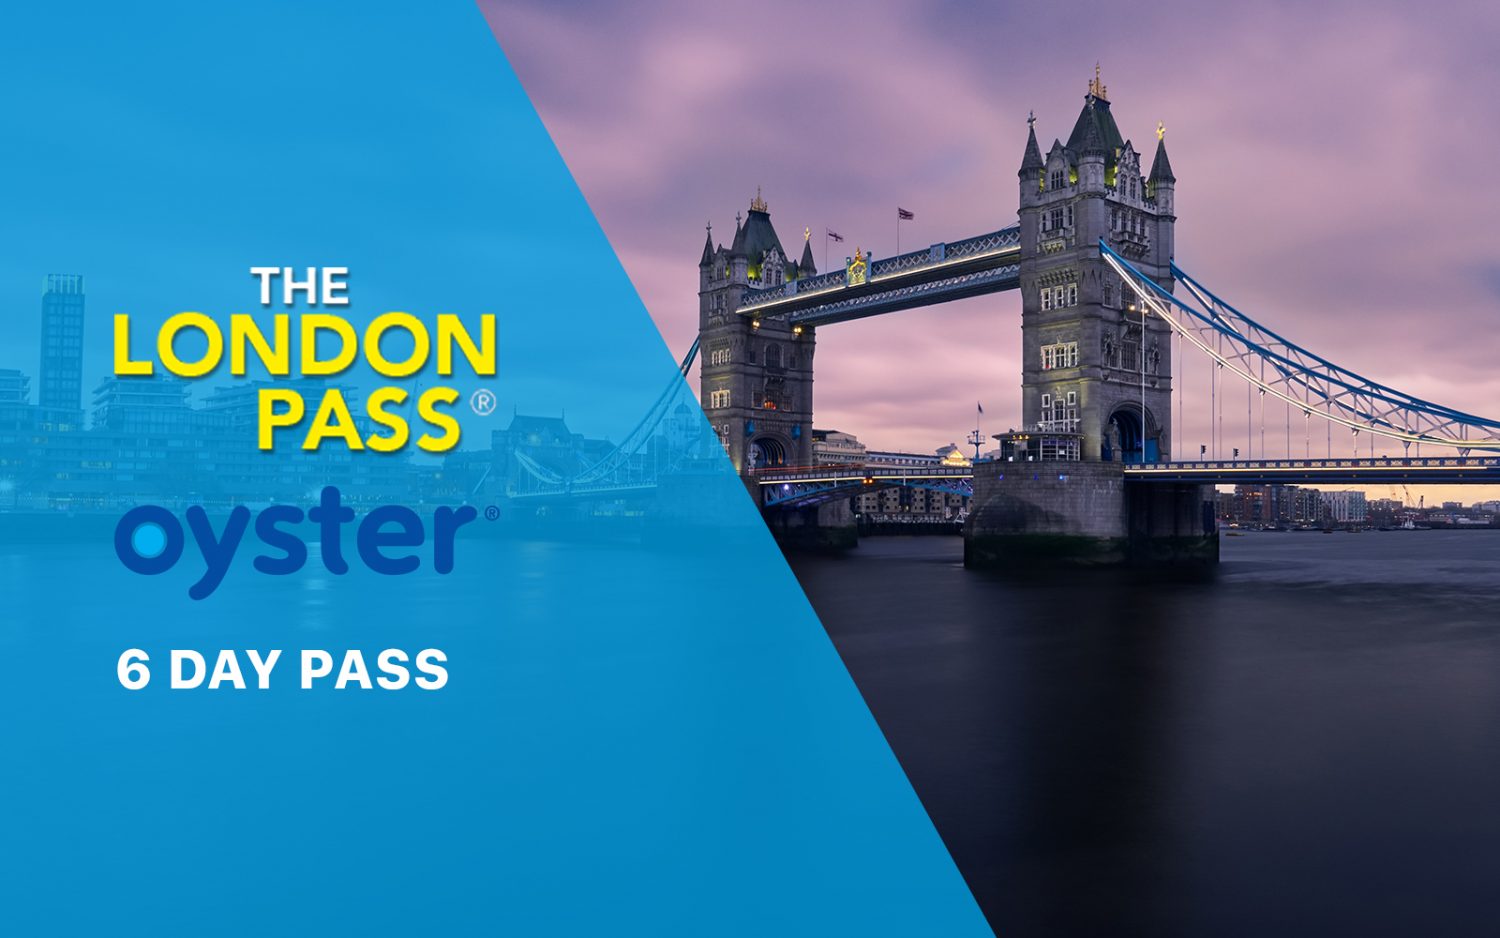 london pass travel card